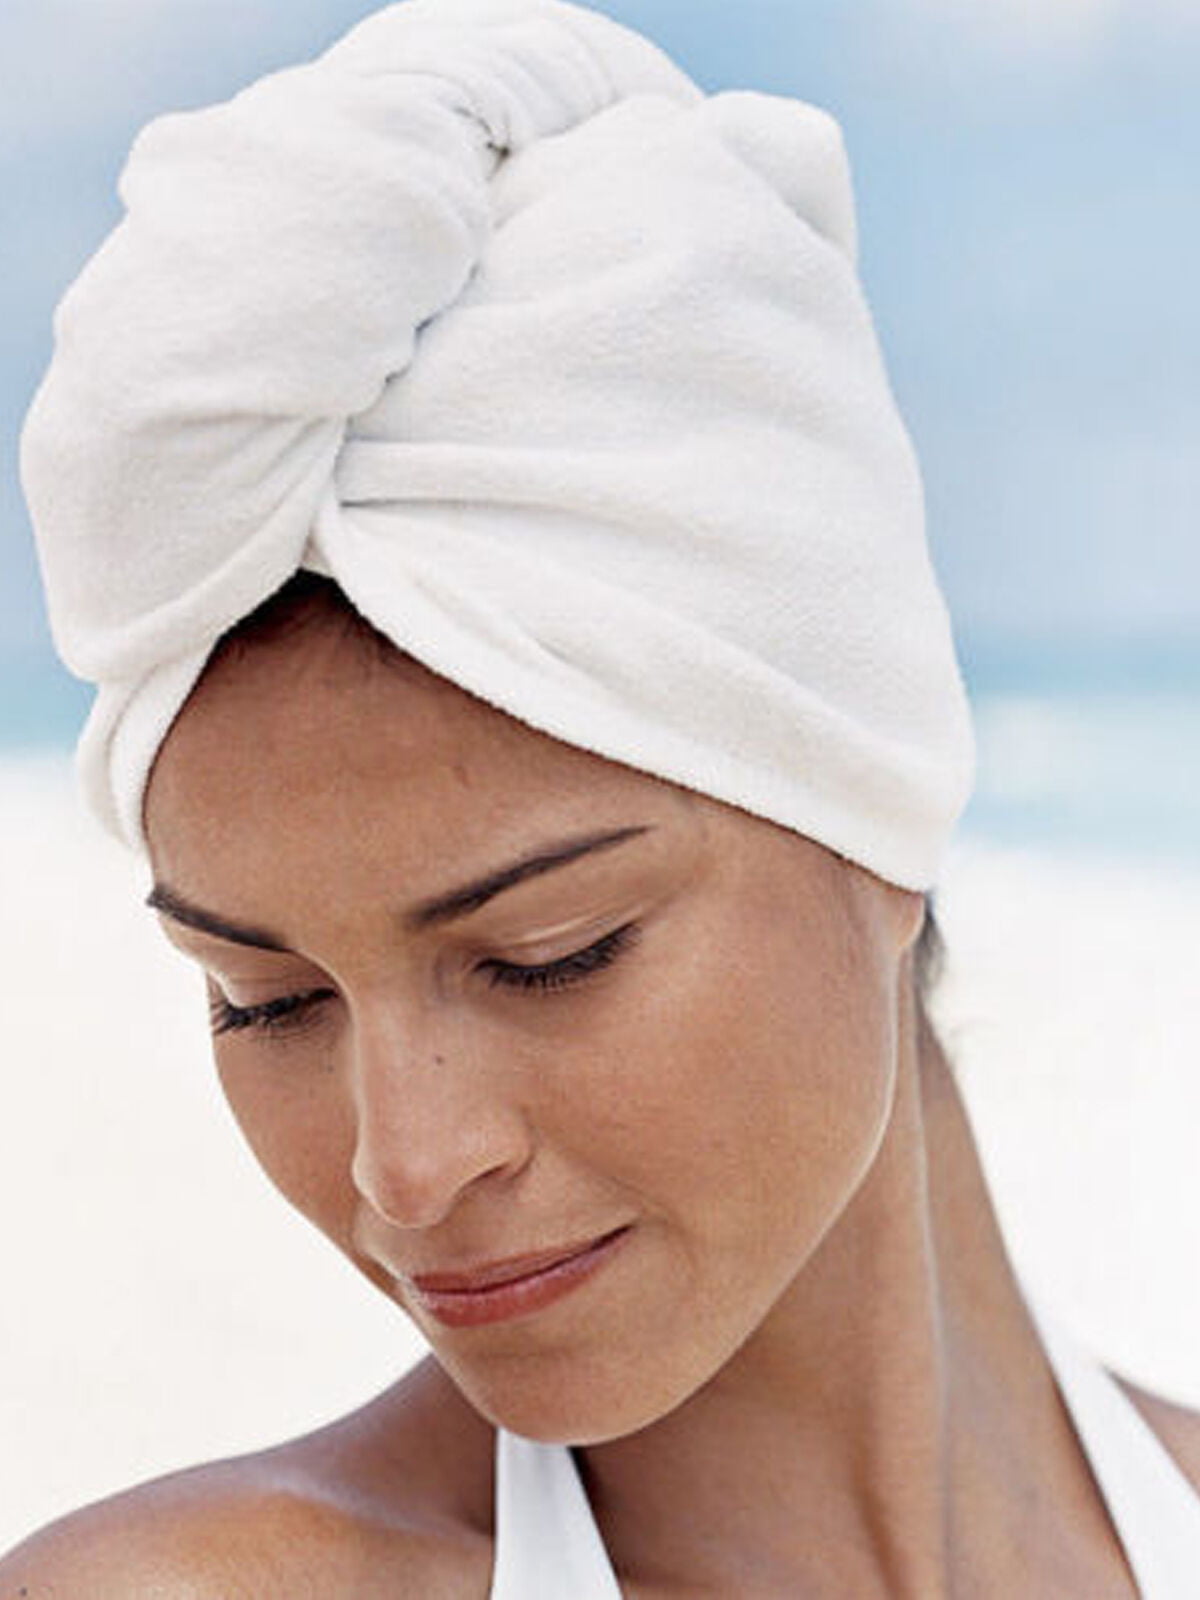 Microfiber Magic Cap Large Hair Dry Hat Quick Drying Hair Towel Bathing Soft 